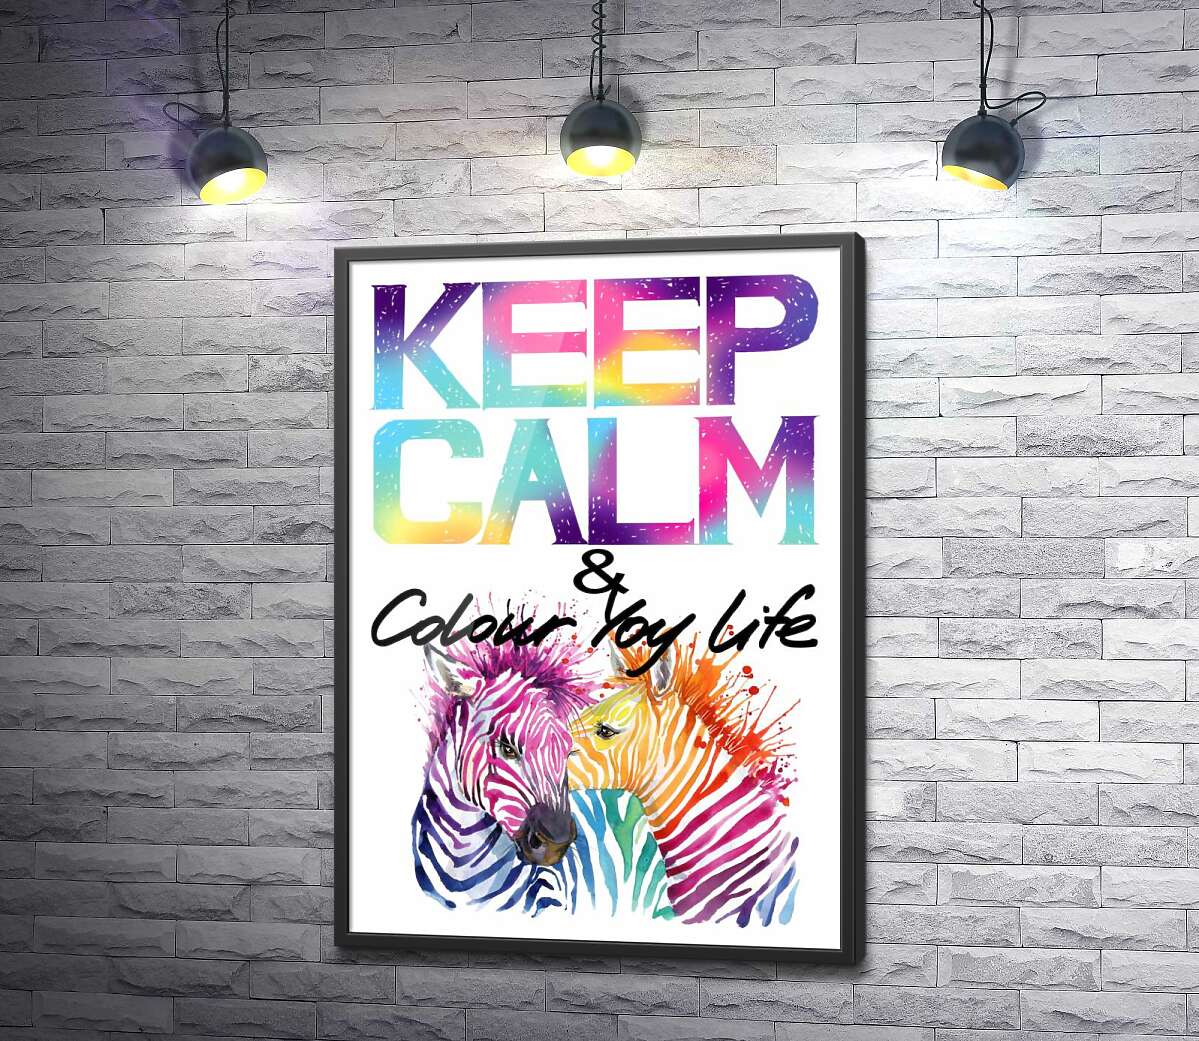 постер Яркие зебры под надписью "keep calm and colour your life"